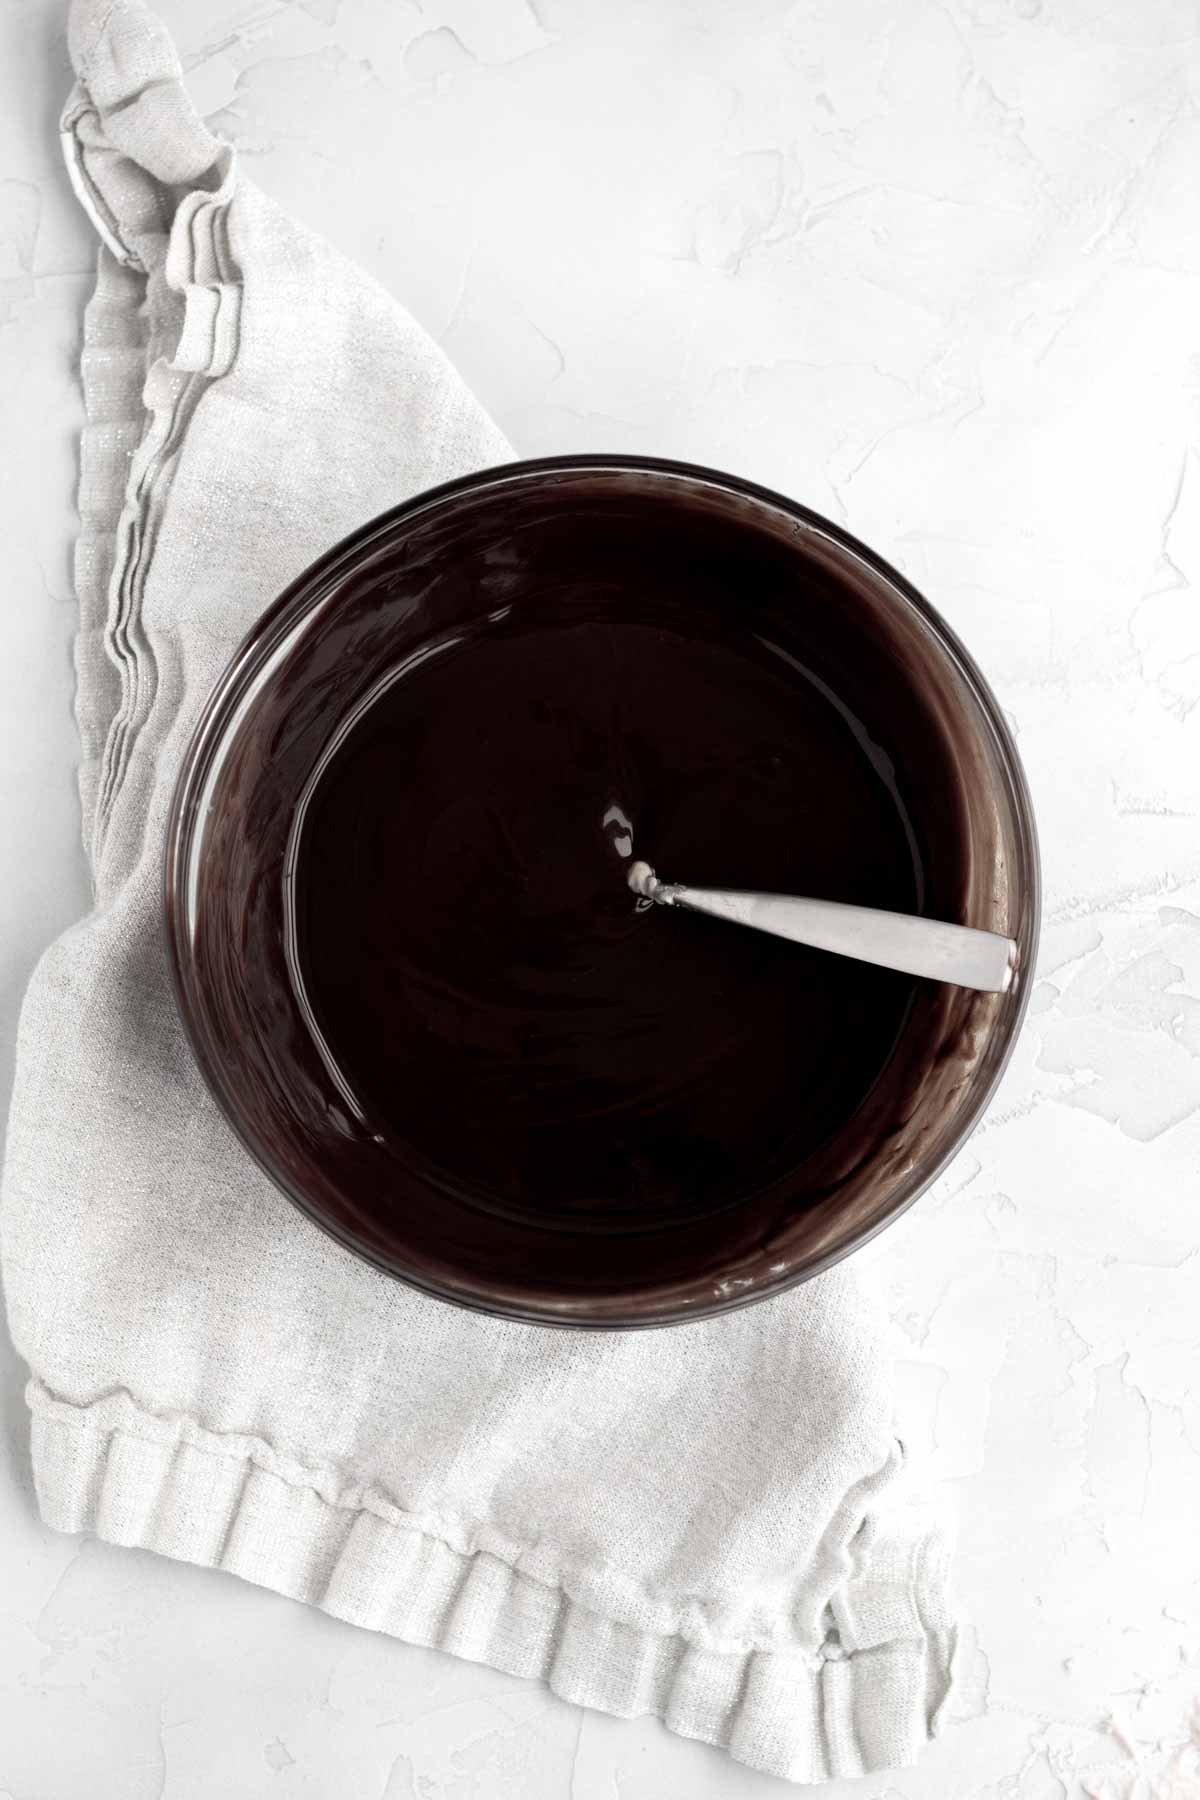 A bowl of warm chocolate ganache.